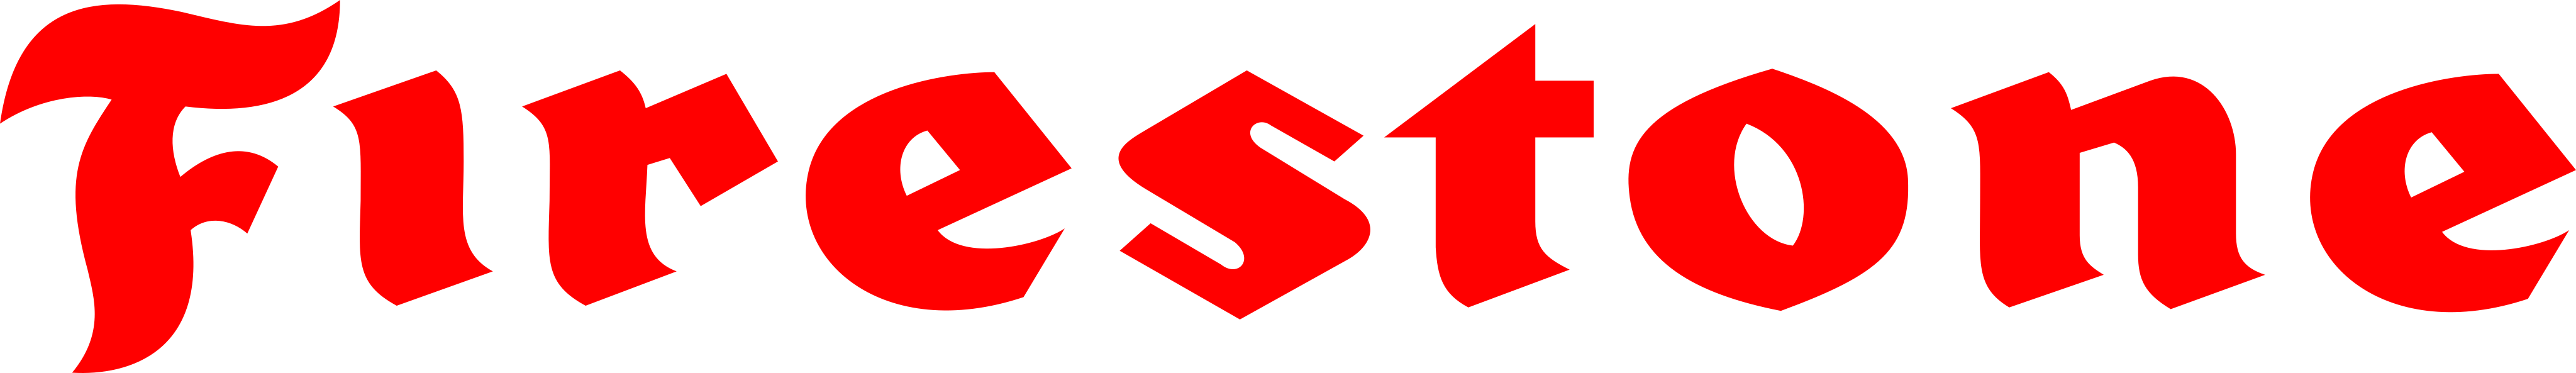 firestone logo - Firestone Logo